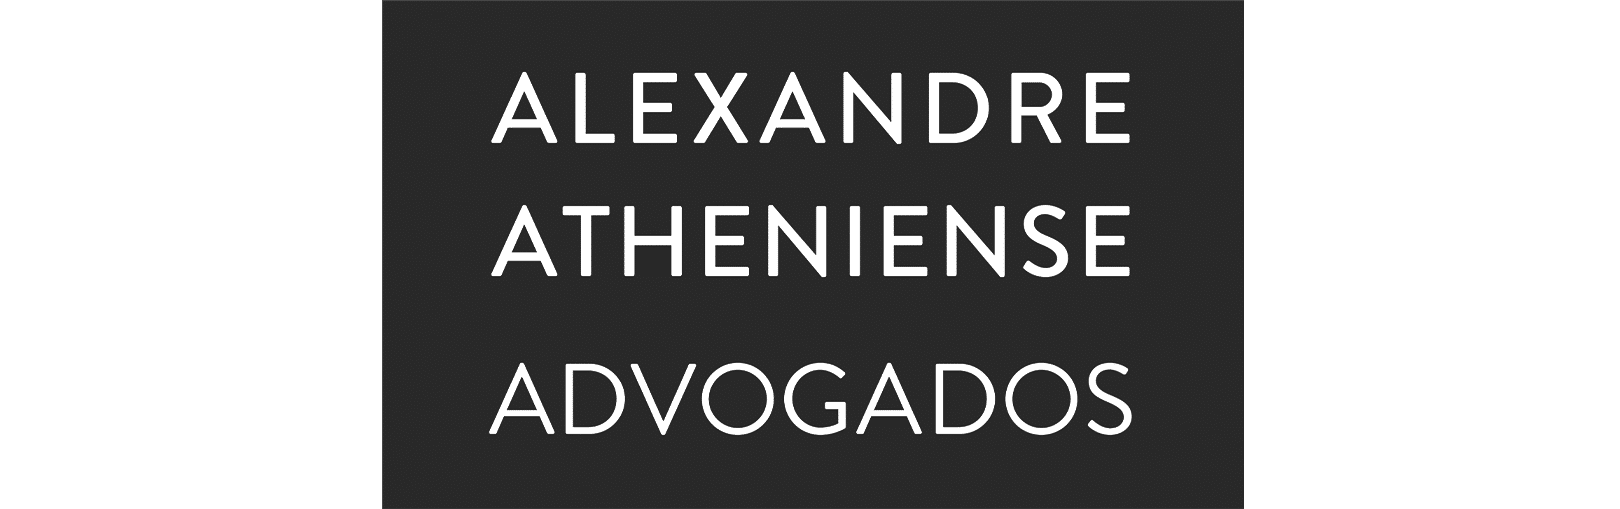 Alexandre Atheniense Adv03